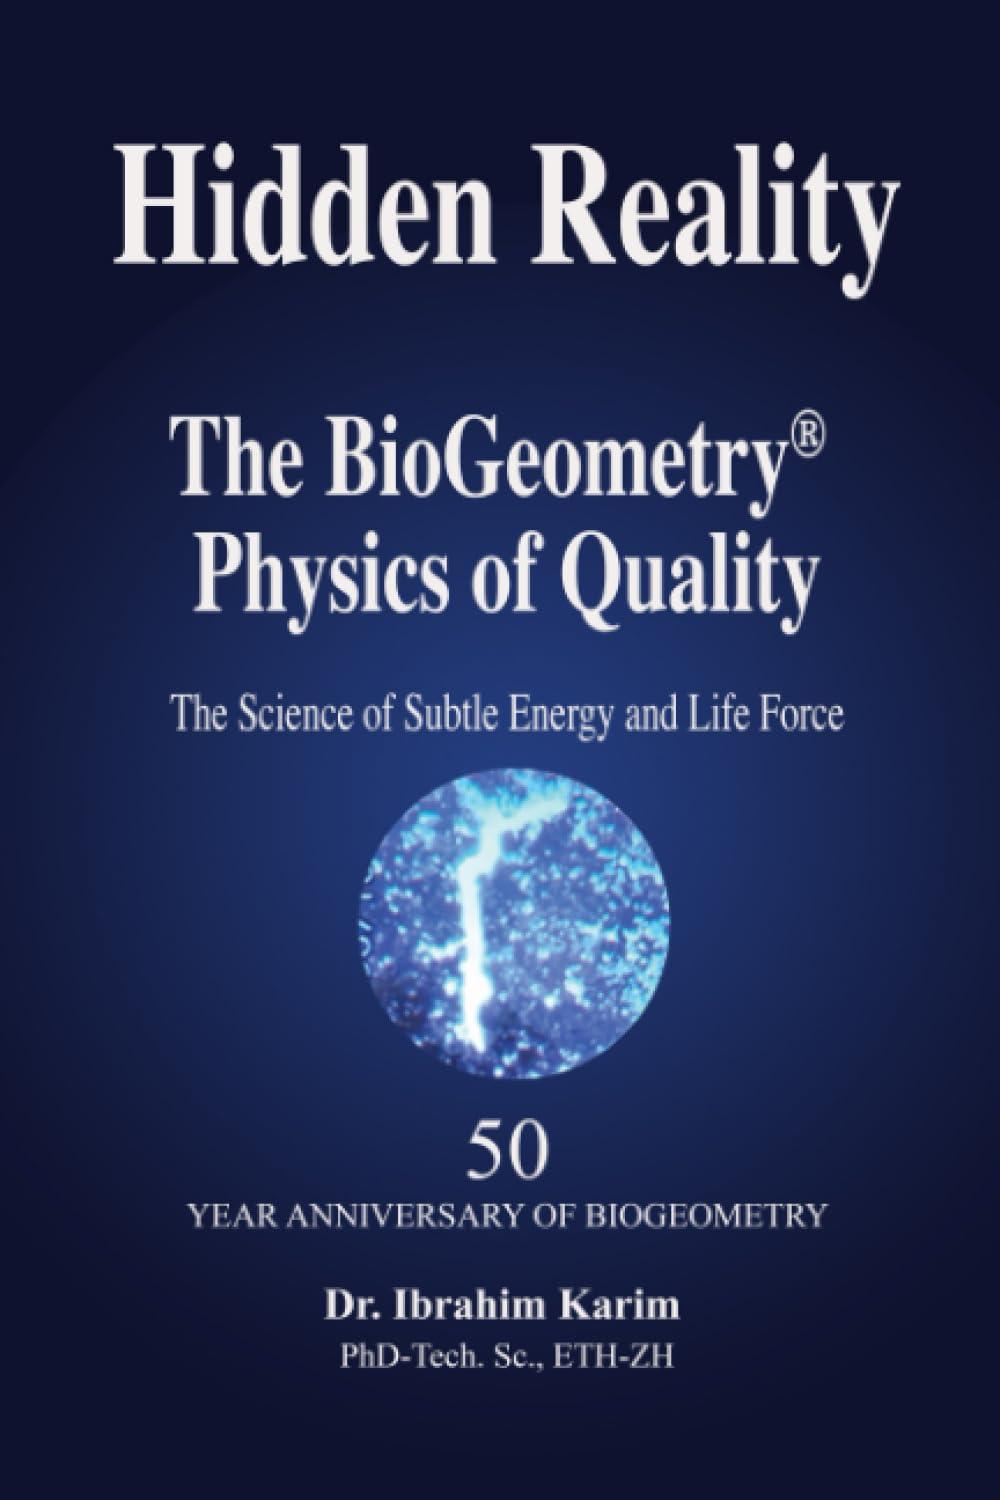 hidden reality the biogeometry physics of quality 1st edition ibrahim karim dr.sc. b0brdhsb3g, 979-8370712425